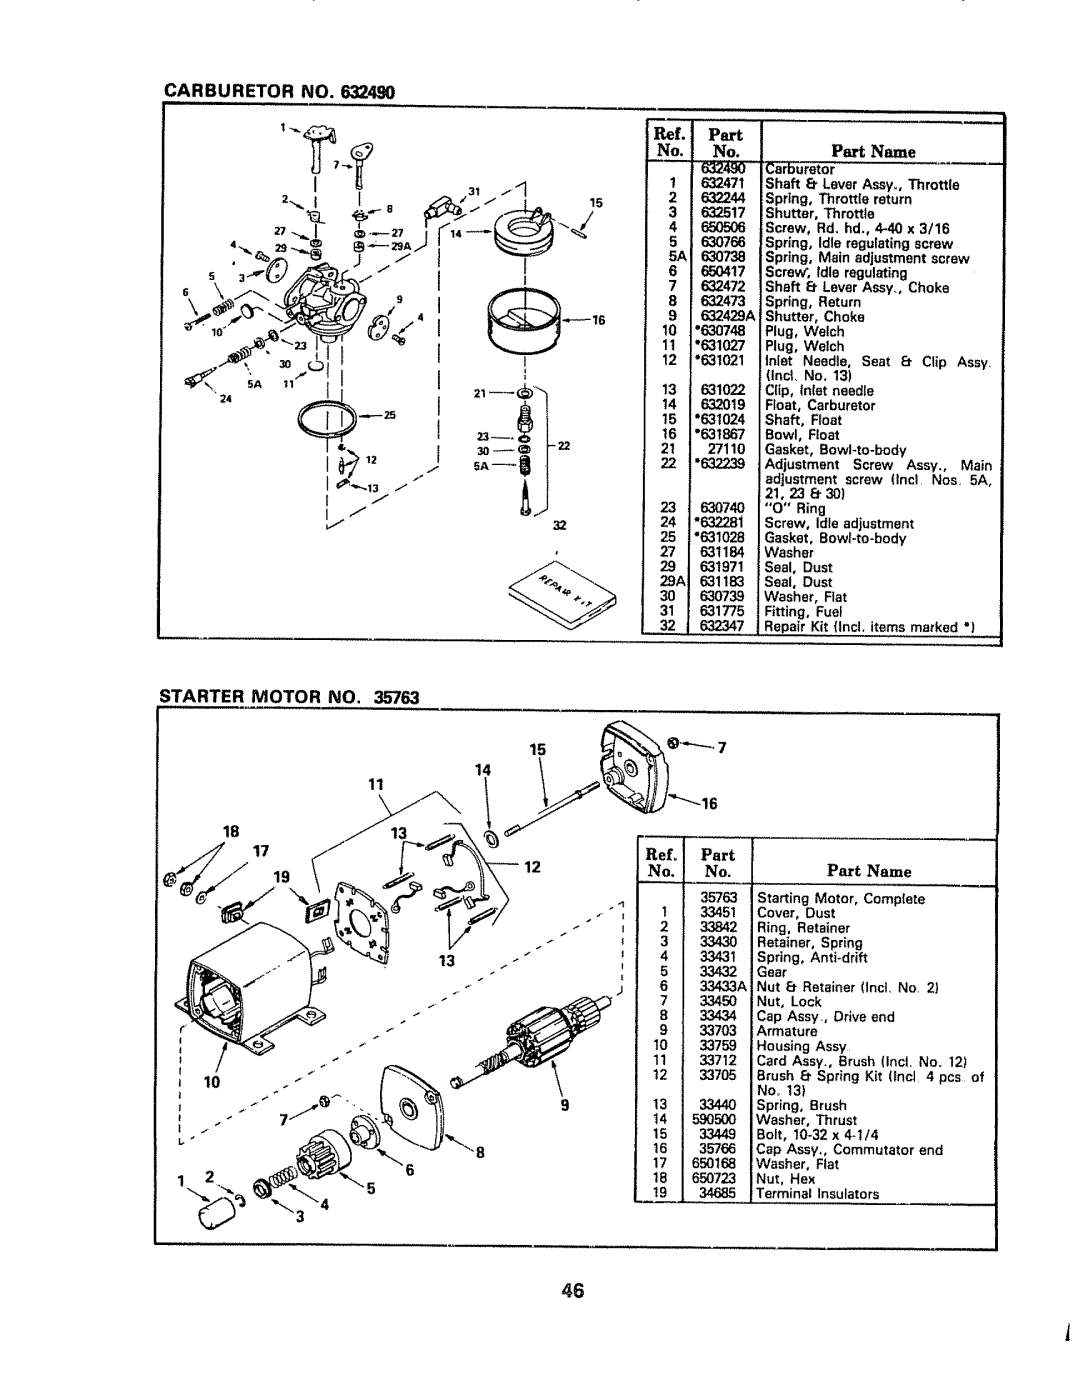 Craftsman 917.254611 owner manual _,_,, 3_,o, Part Name, Plug, Welch 